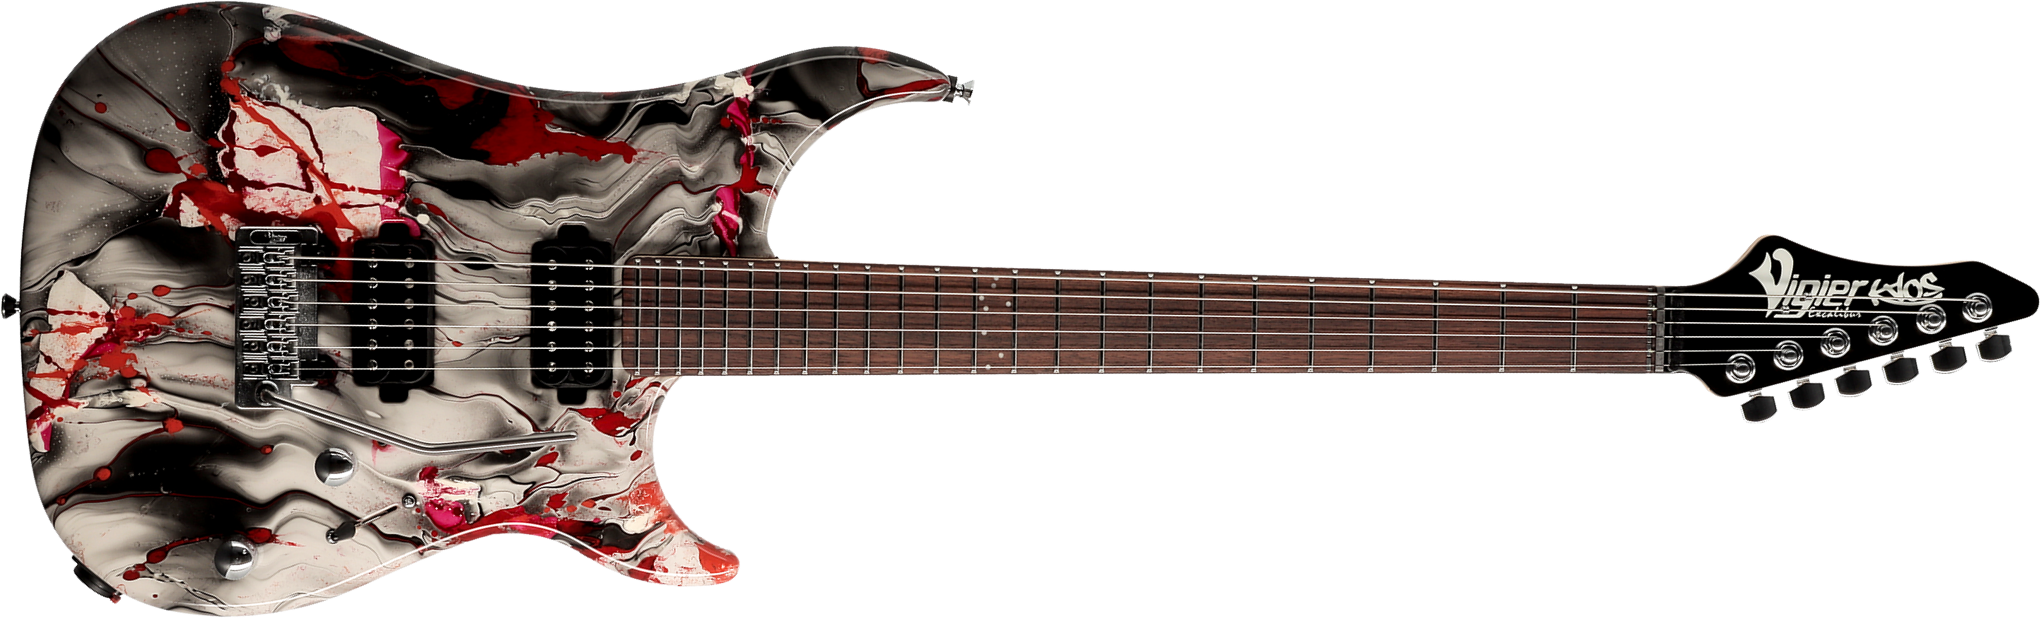 Vigier Excalibur Kaos 2h Trem Rw - Rock Art Chrome Black Red - E-Gitarre in Str-Form - Main picture